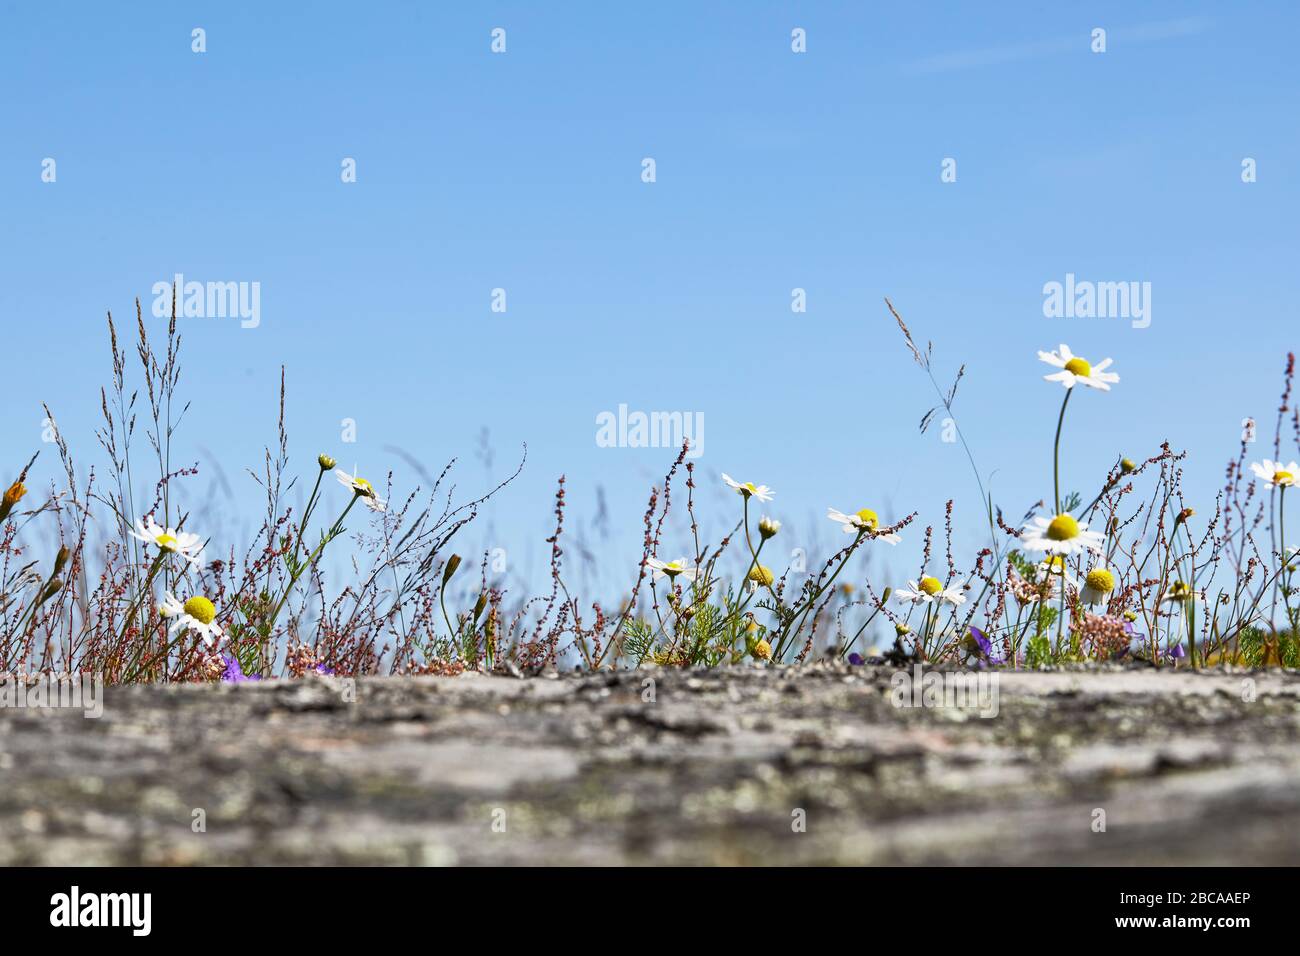 Sweden, Östergötaland, St. Anna, archipelago, flowers on rocks Stock Photo